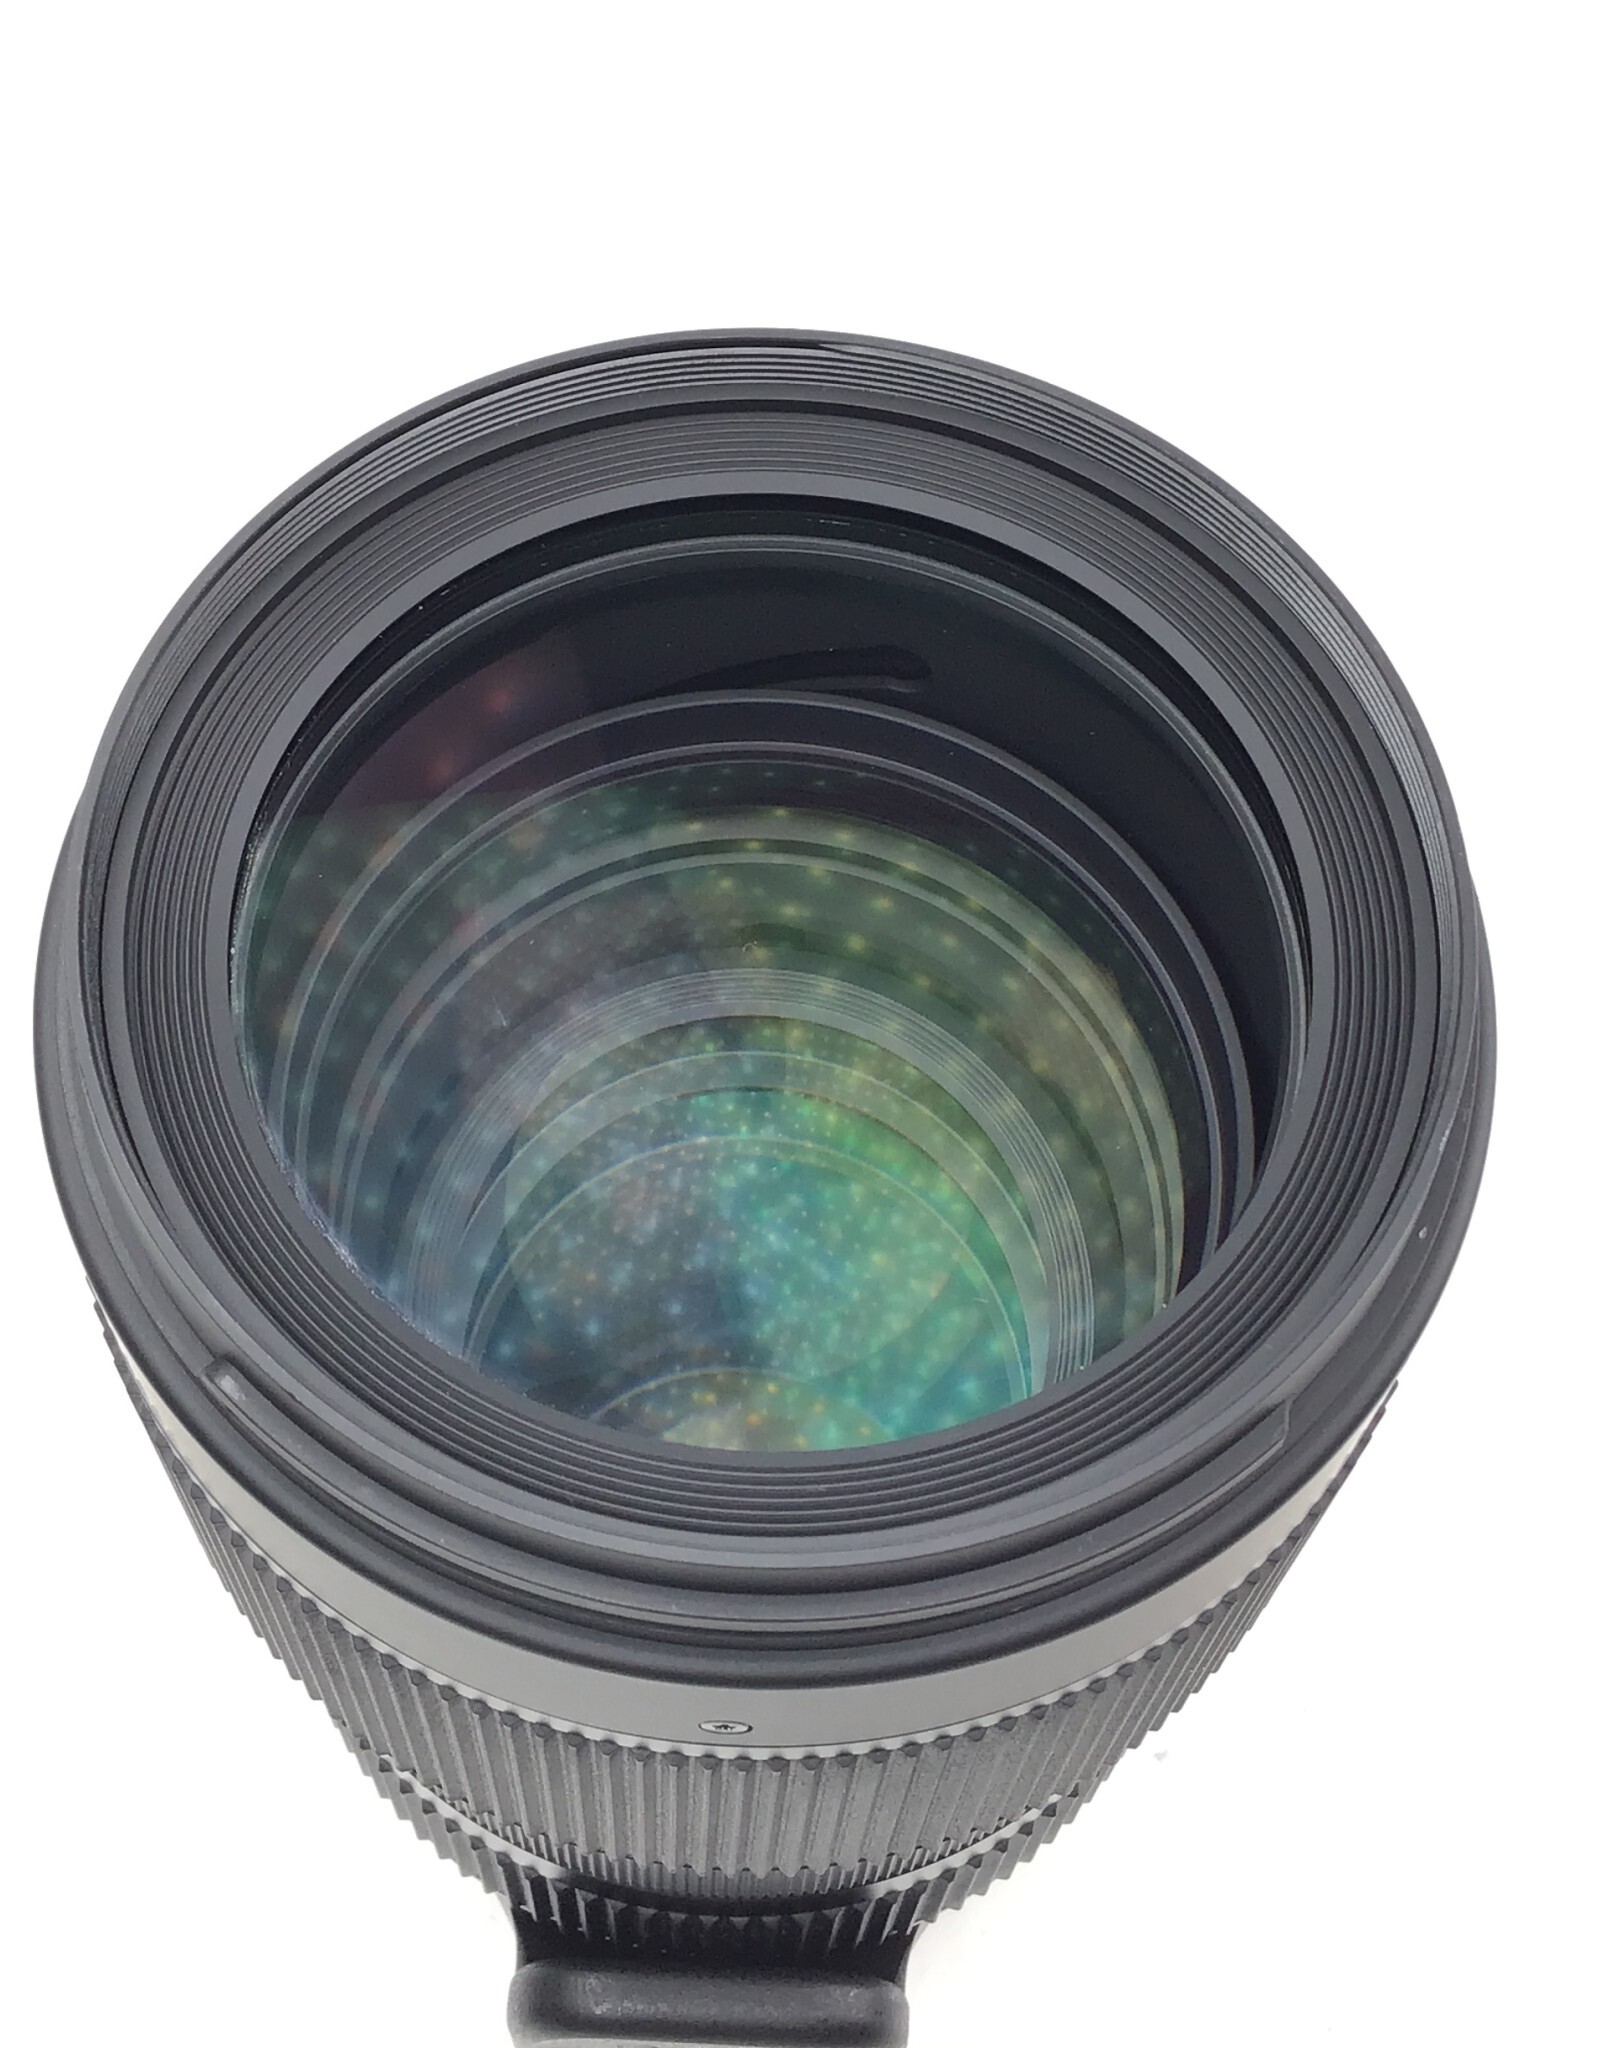 SIGMA Sigma Art 50-100mm f1.8 DC Lens for Nikon Used Good